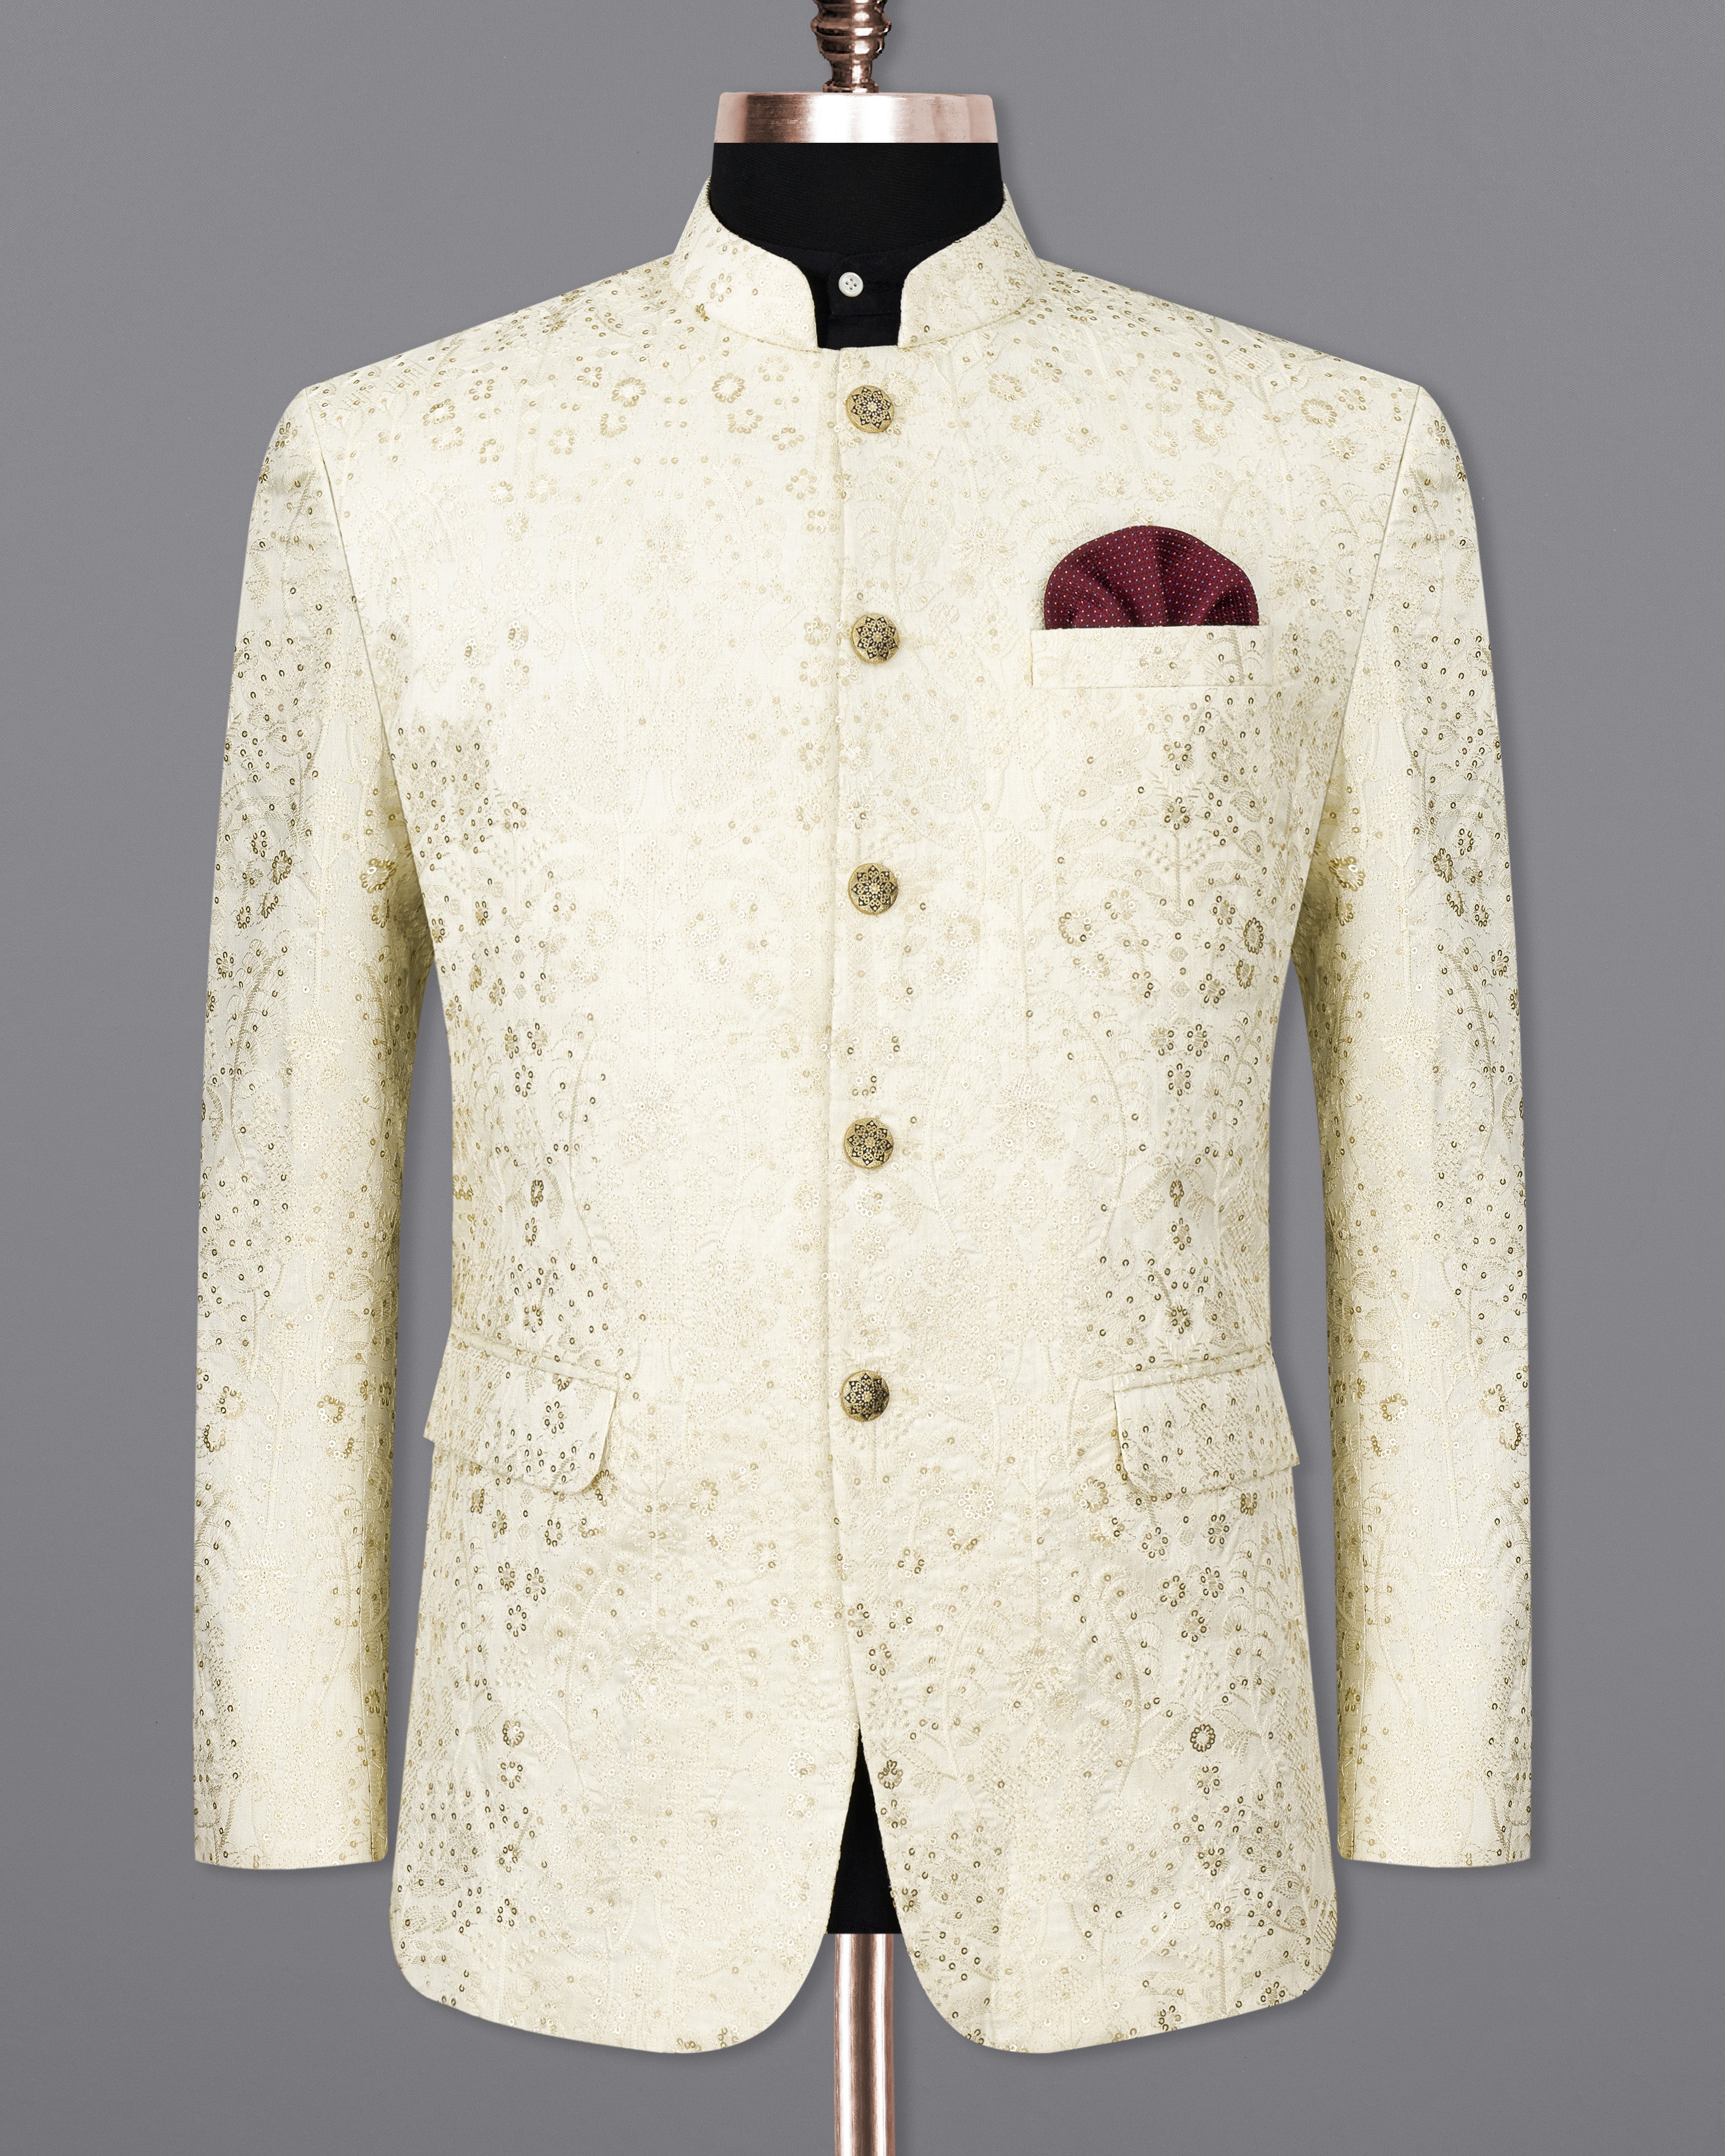 Merino Cream Cotton Thread Embroidered Bandhgala Blazer